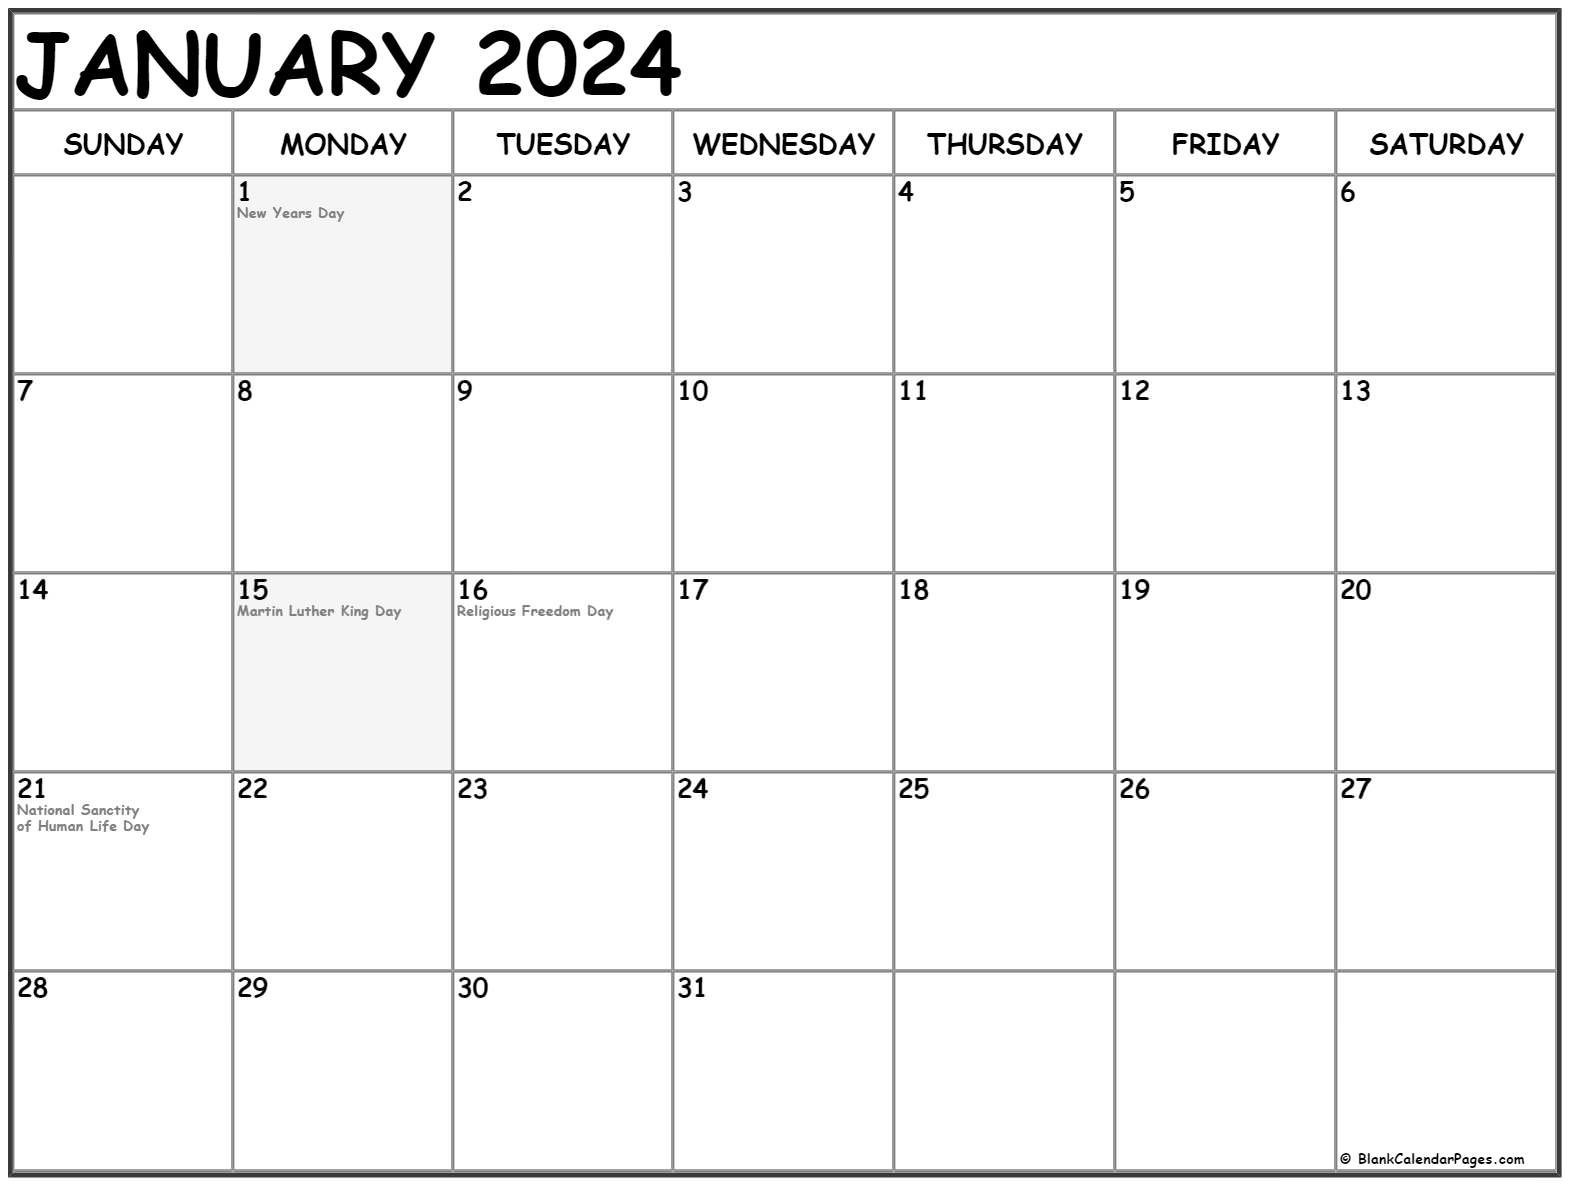 january-2024-with-holidays-calendar